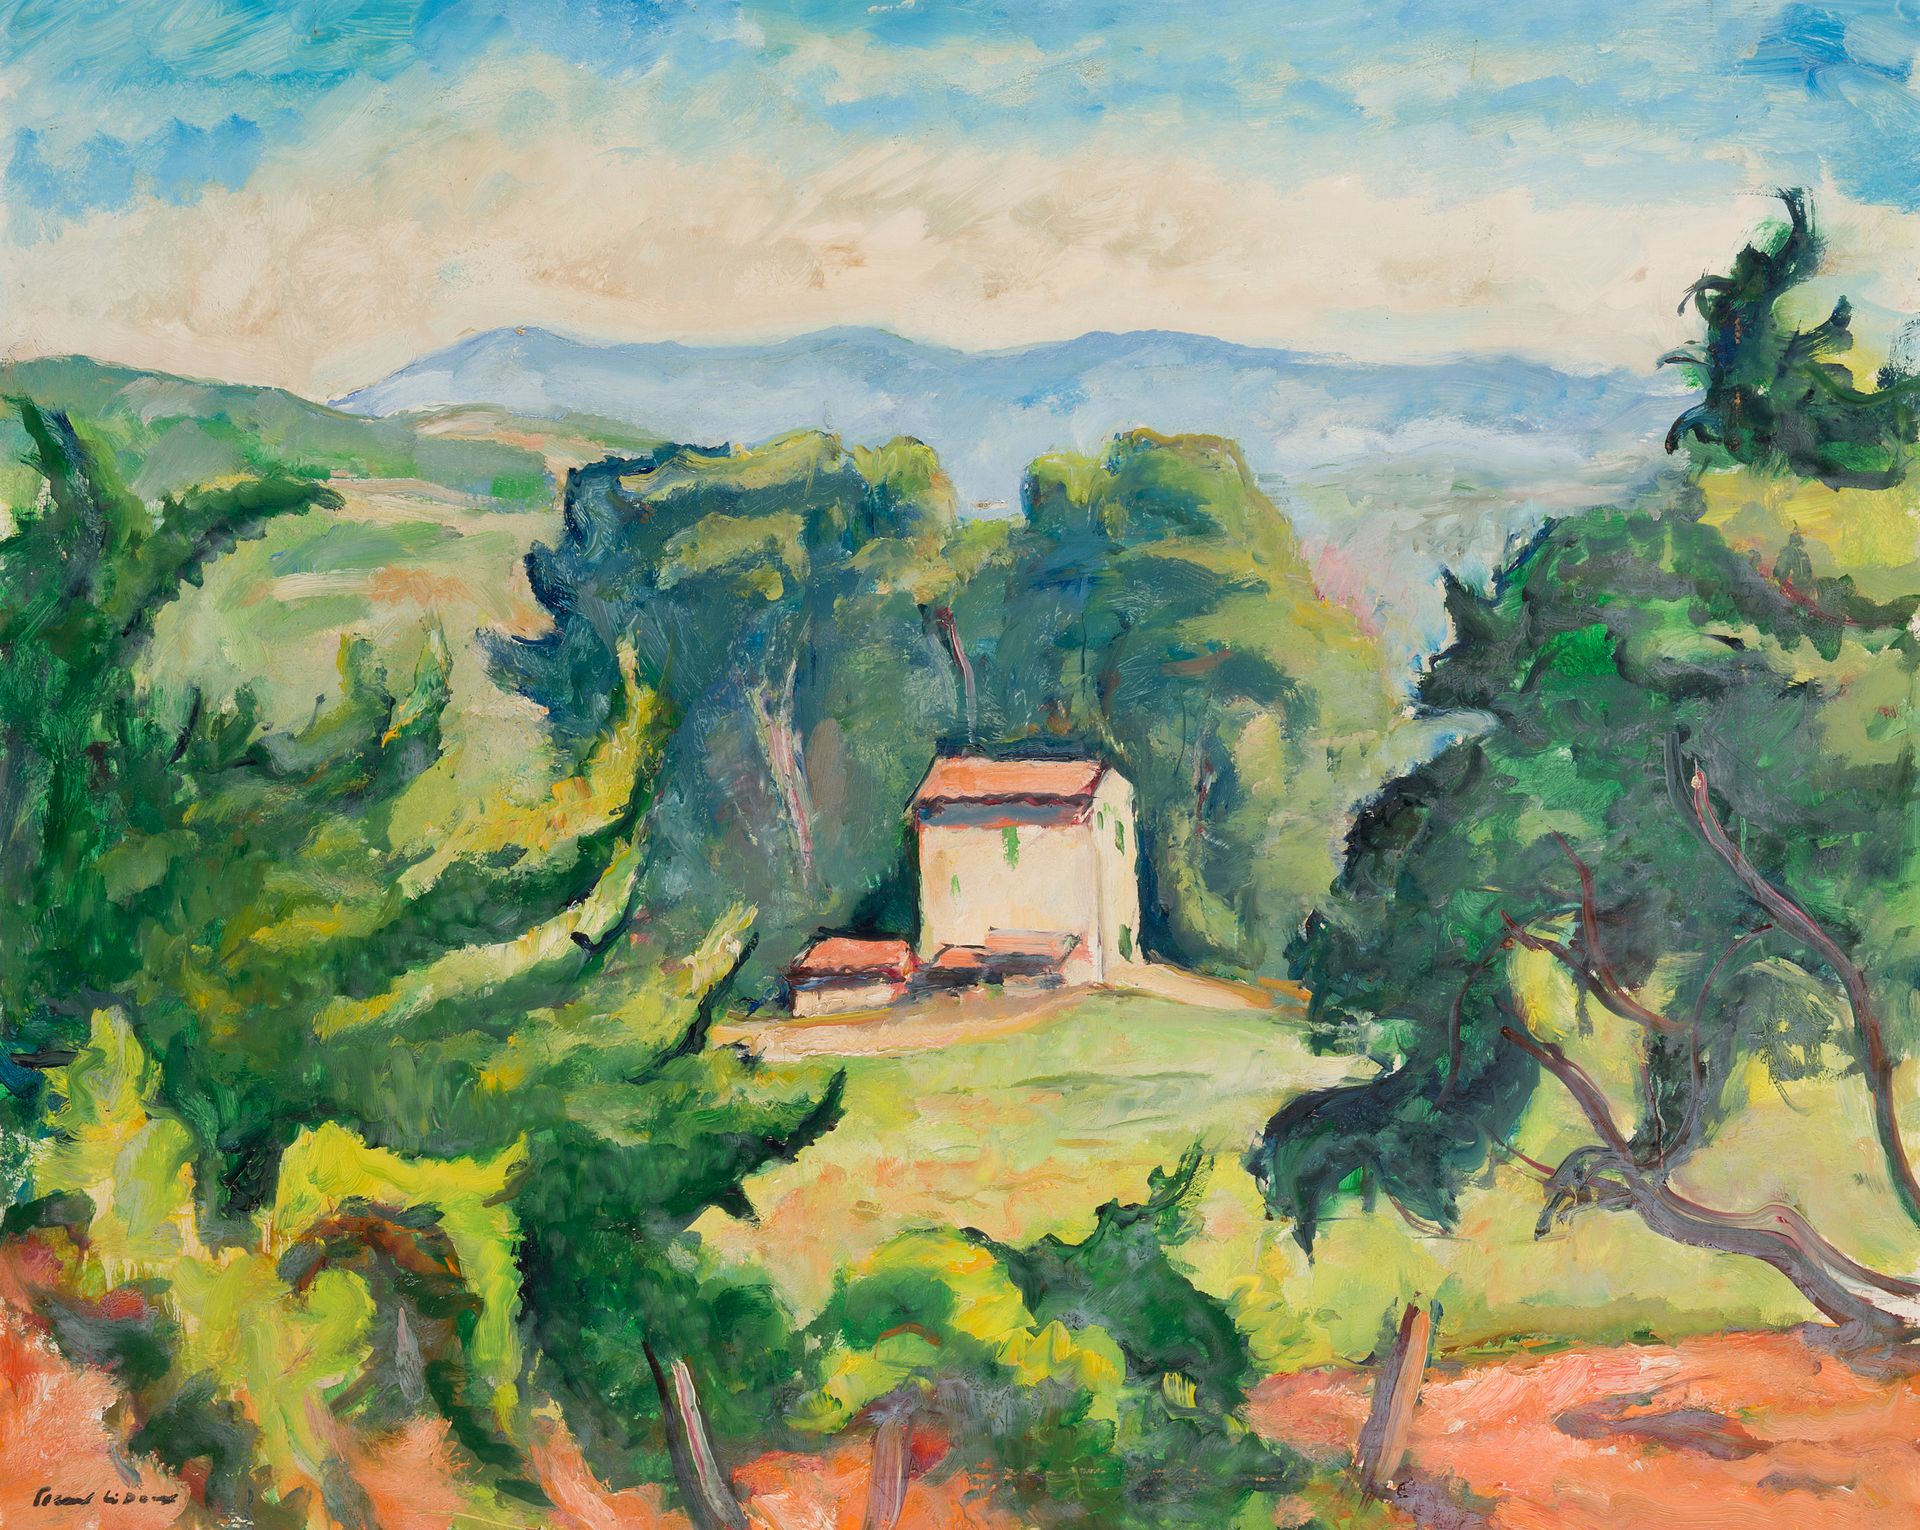 Null 夏尔-皮卡特-勒杜(1881-1959)
科蒂纳克，1959年
左下角有签名的伊索莱尔上的油画
65 x 81 cm